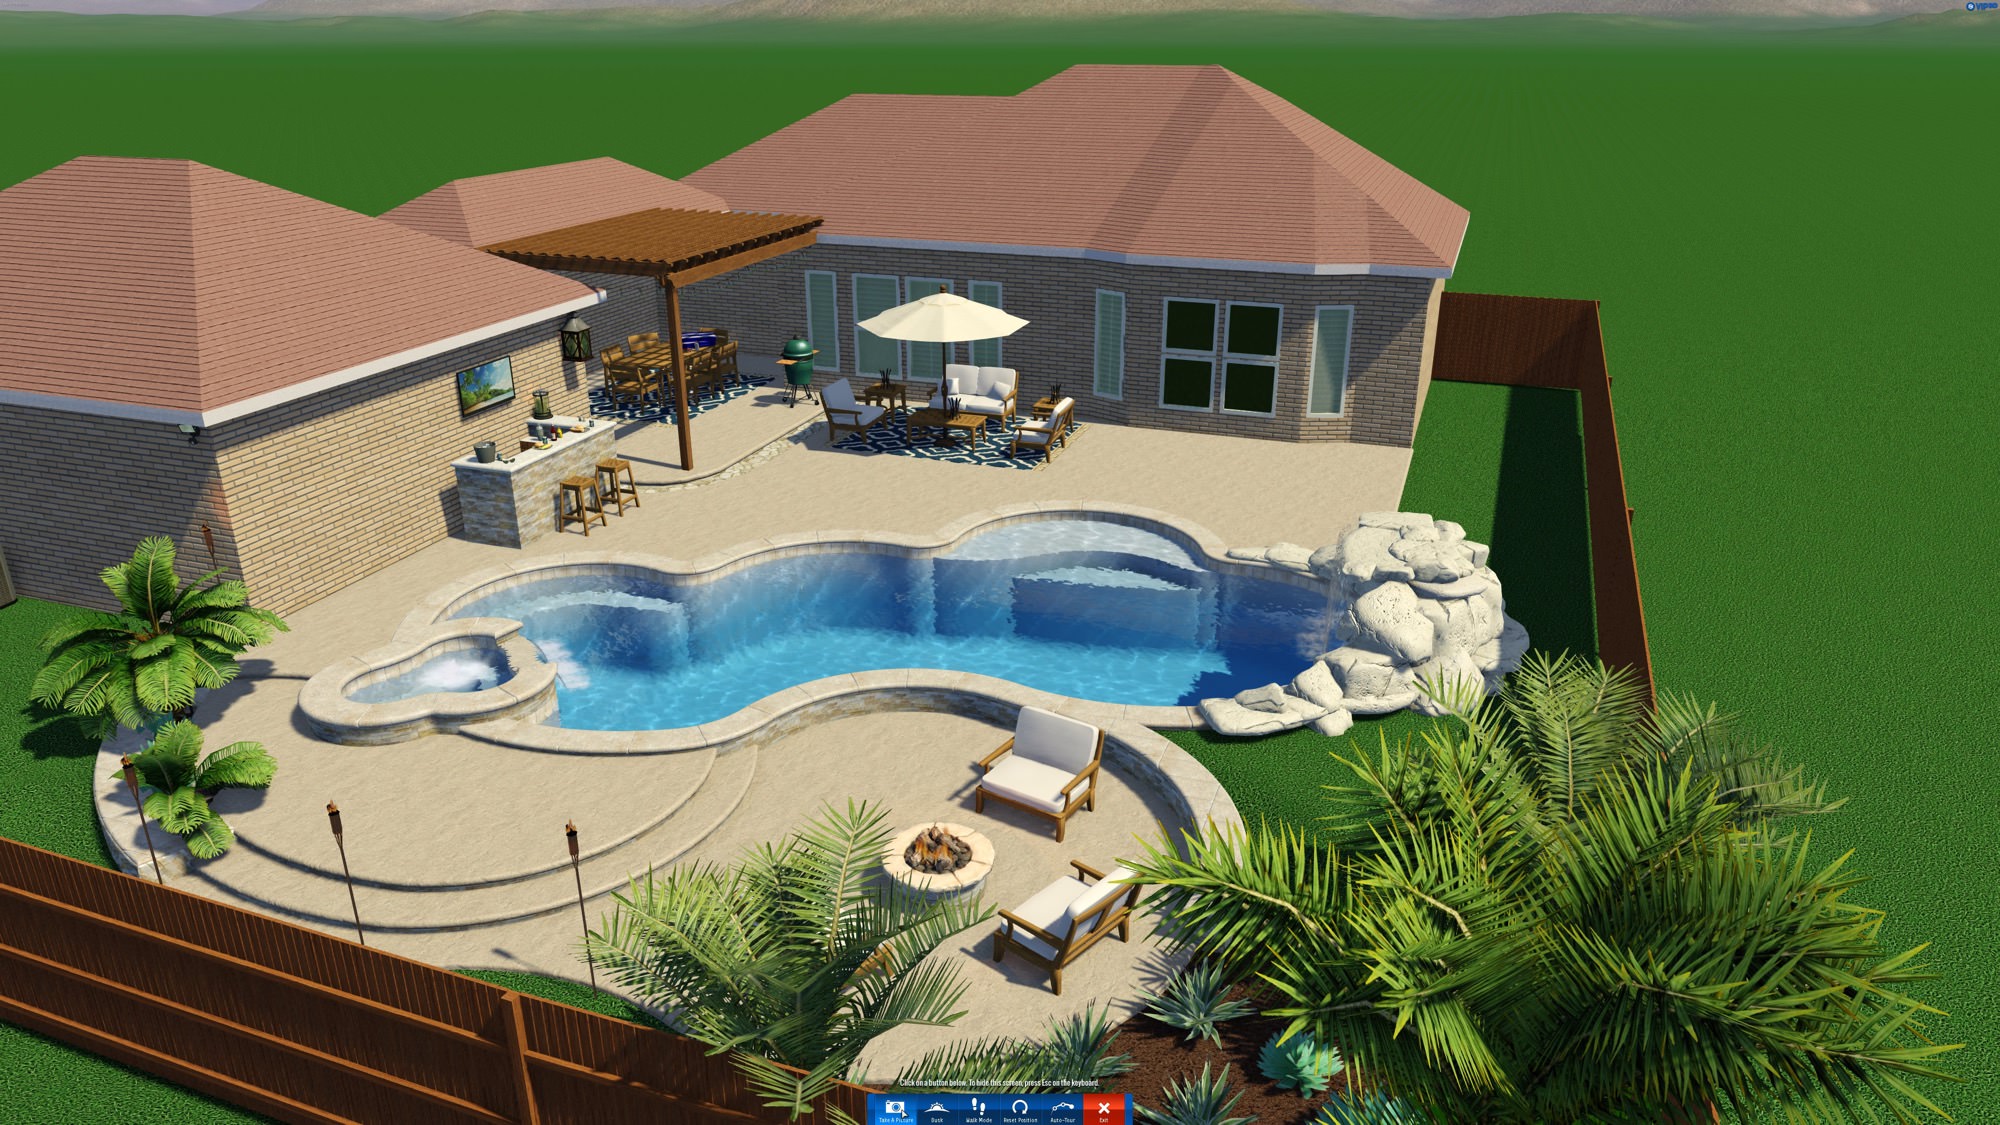 Pool Builder in Frisco, Texas - Gideo Construction